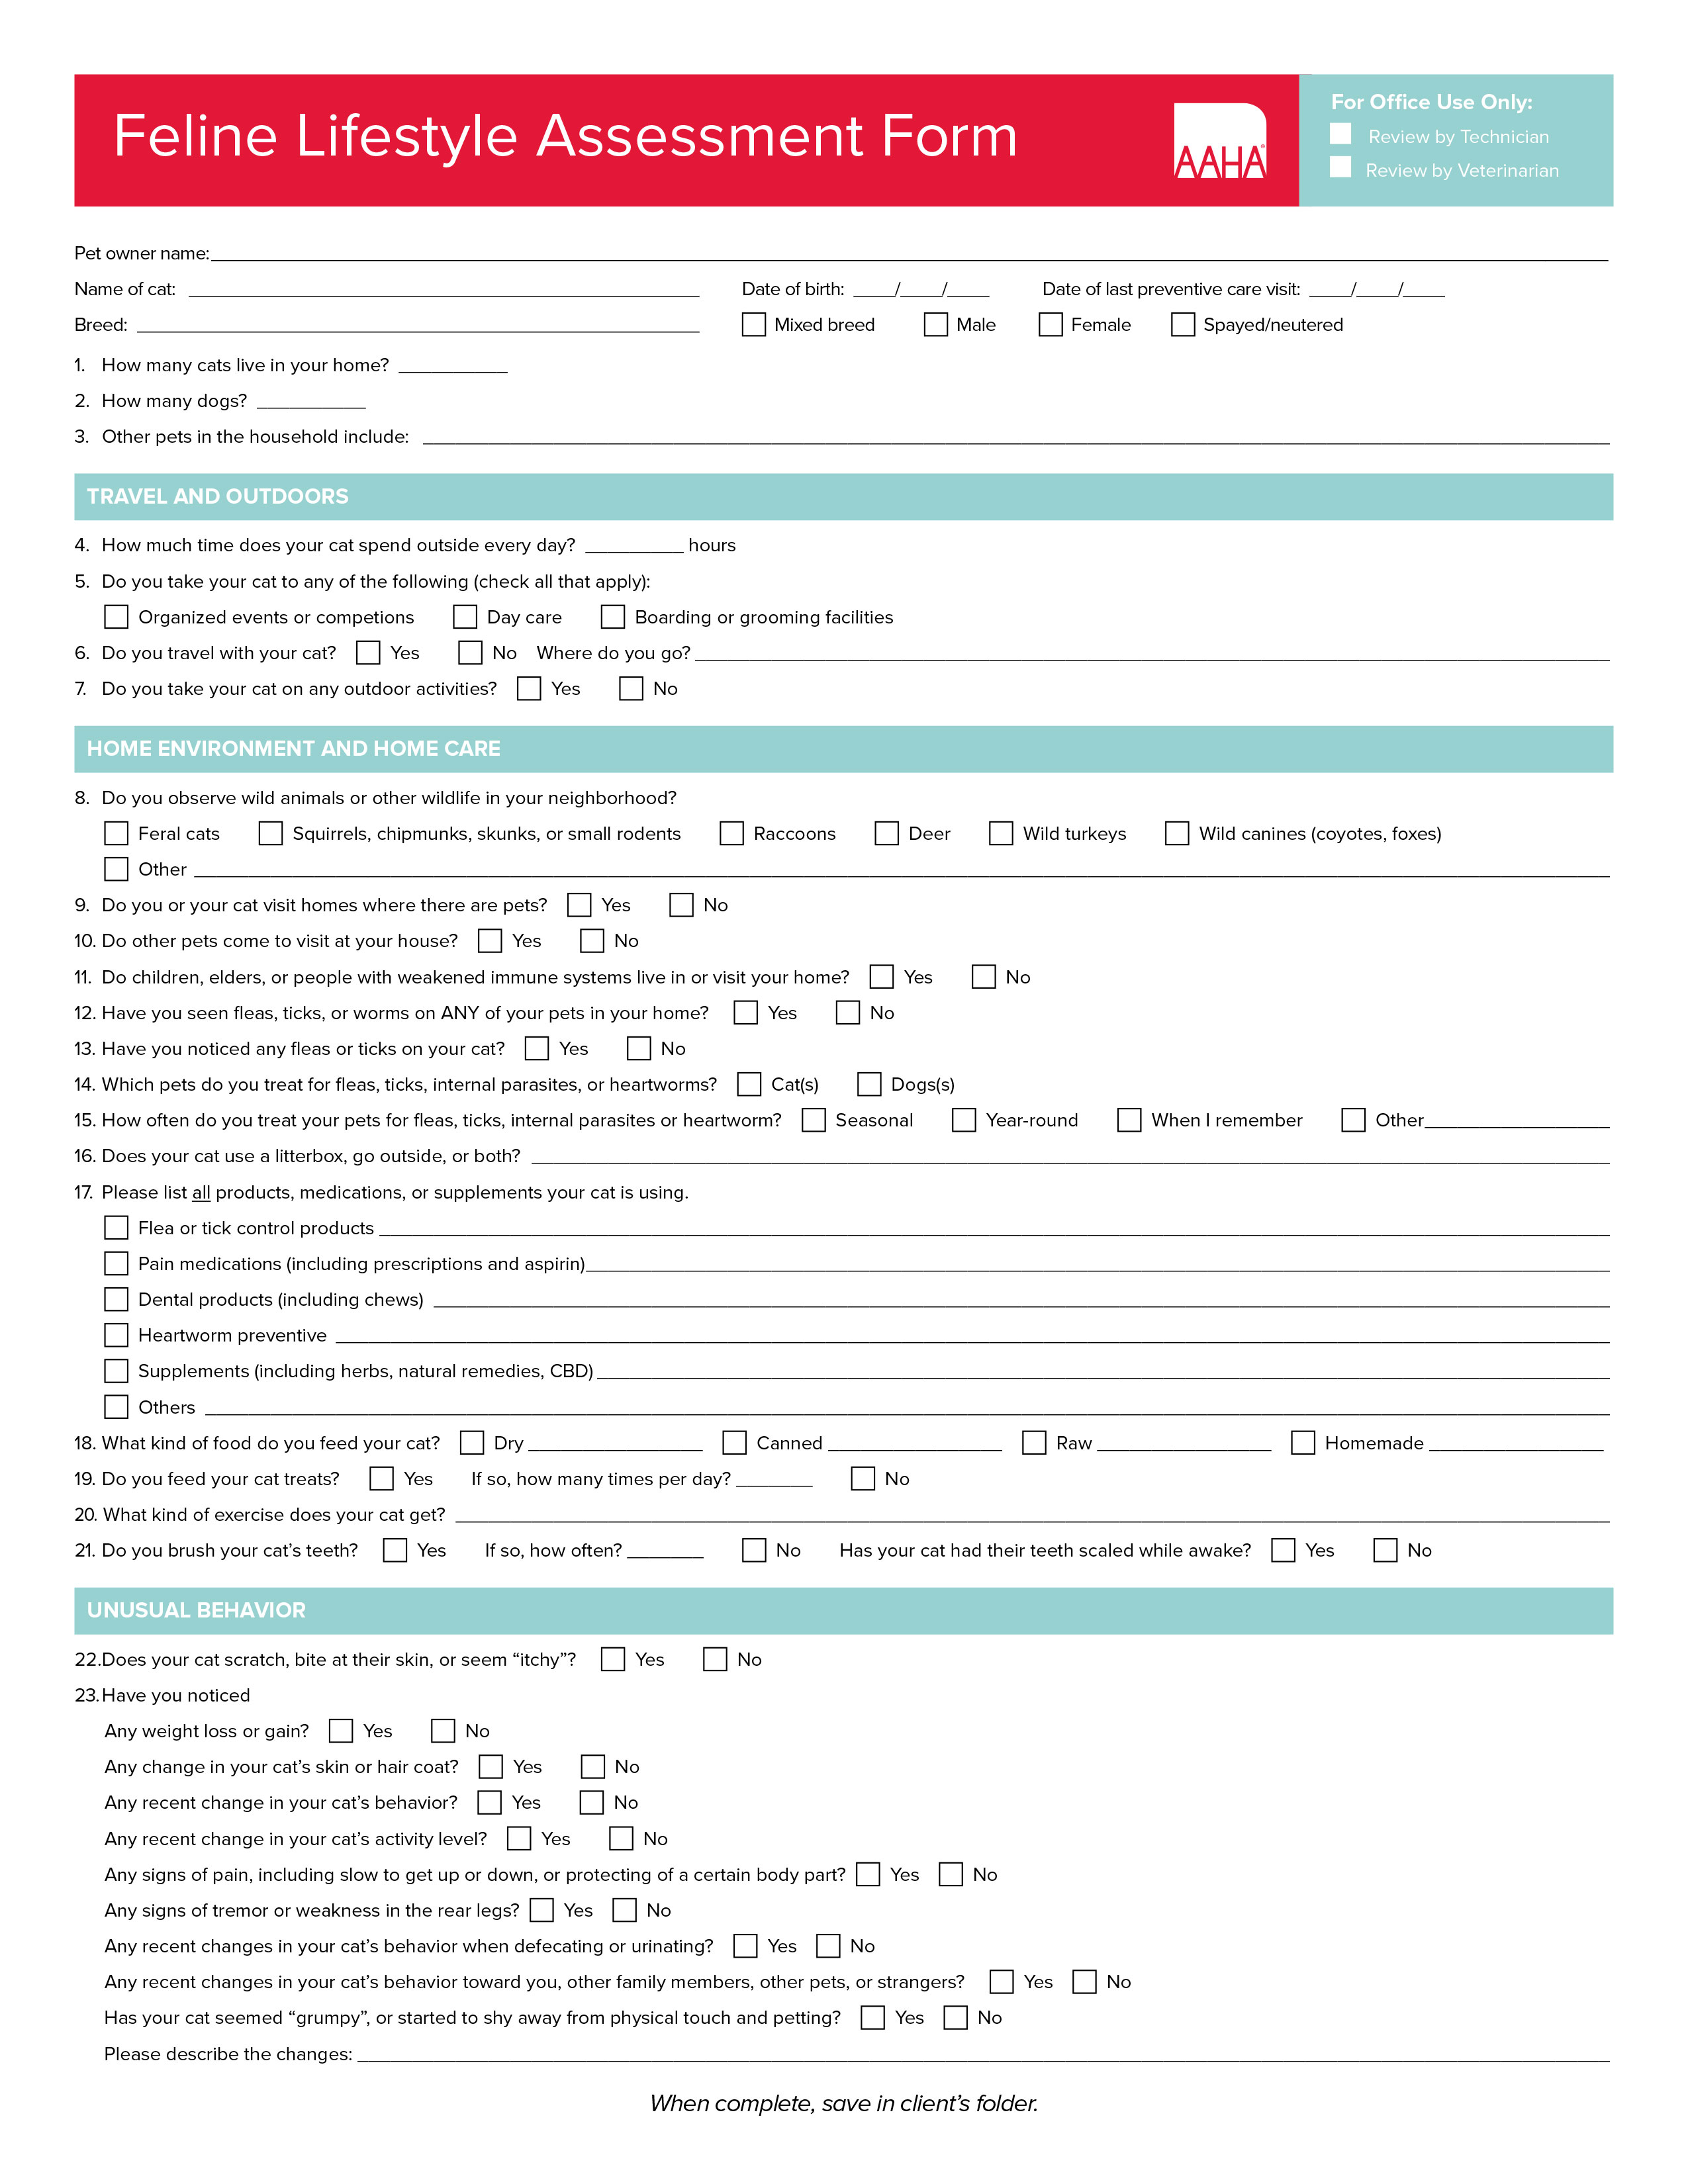 Figure 5. American Animal Hospital Association feline health assessment form.